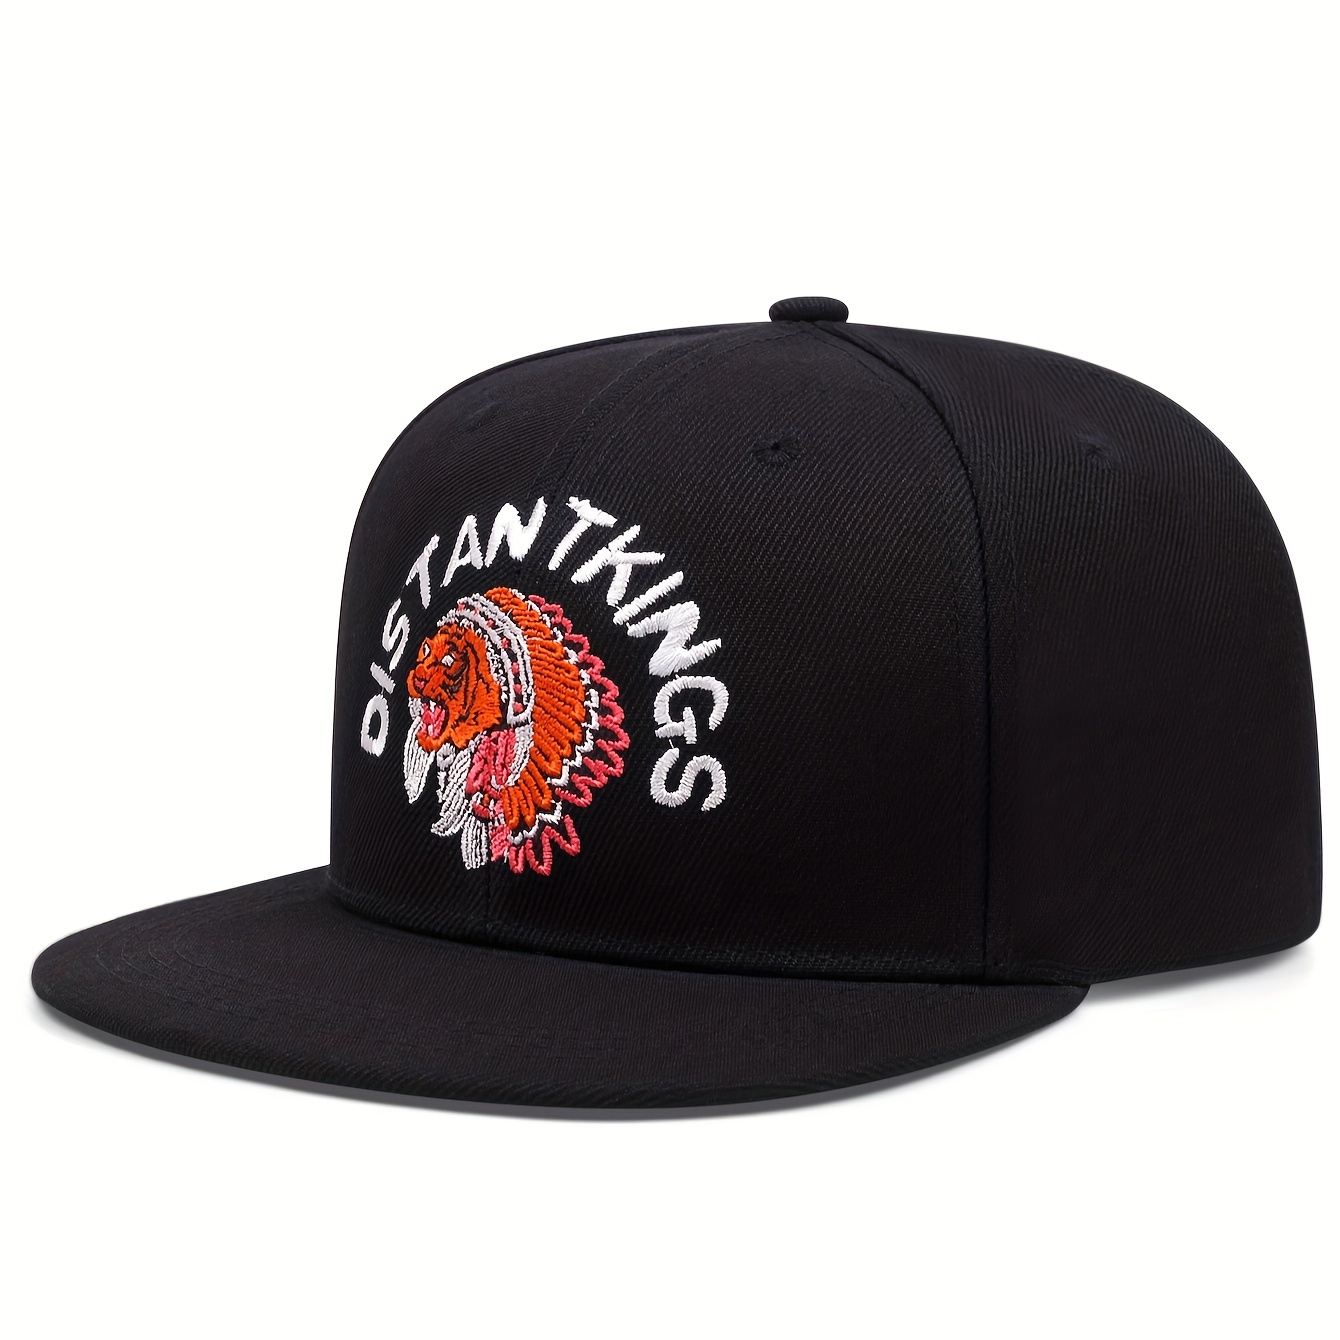 Pbs Zoom Cap Cowboy Hat Snapback Cap Sunhat Hats Caps For Men Women's -  Baseball Caps - AliExpress